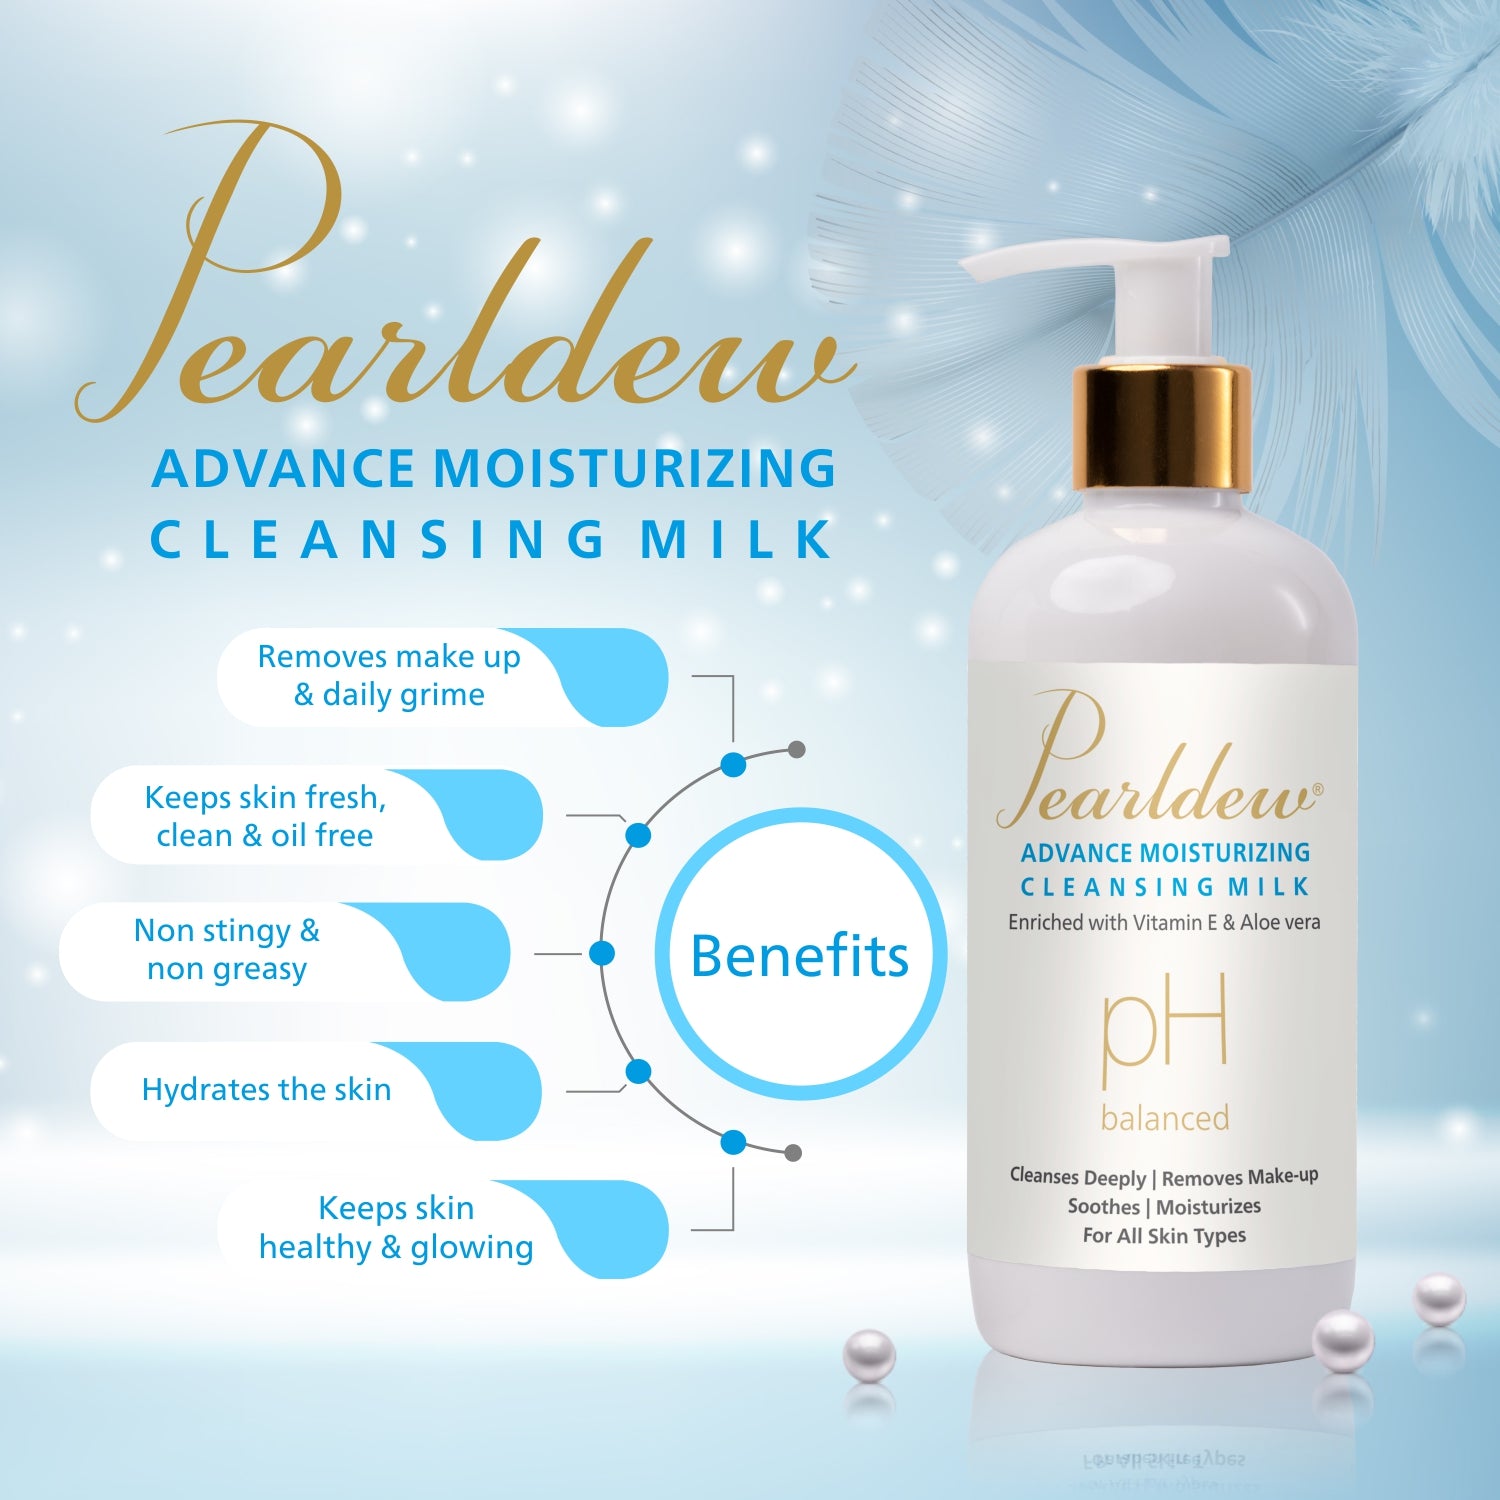 Pearldew Advance Moisturizing Cleansing Milk (300 ml)